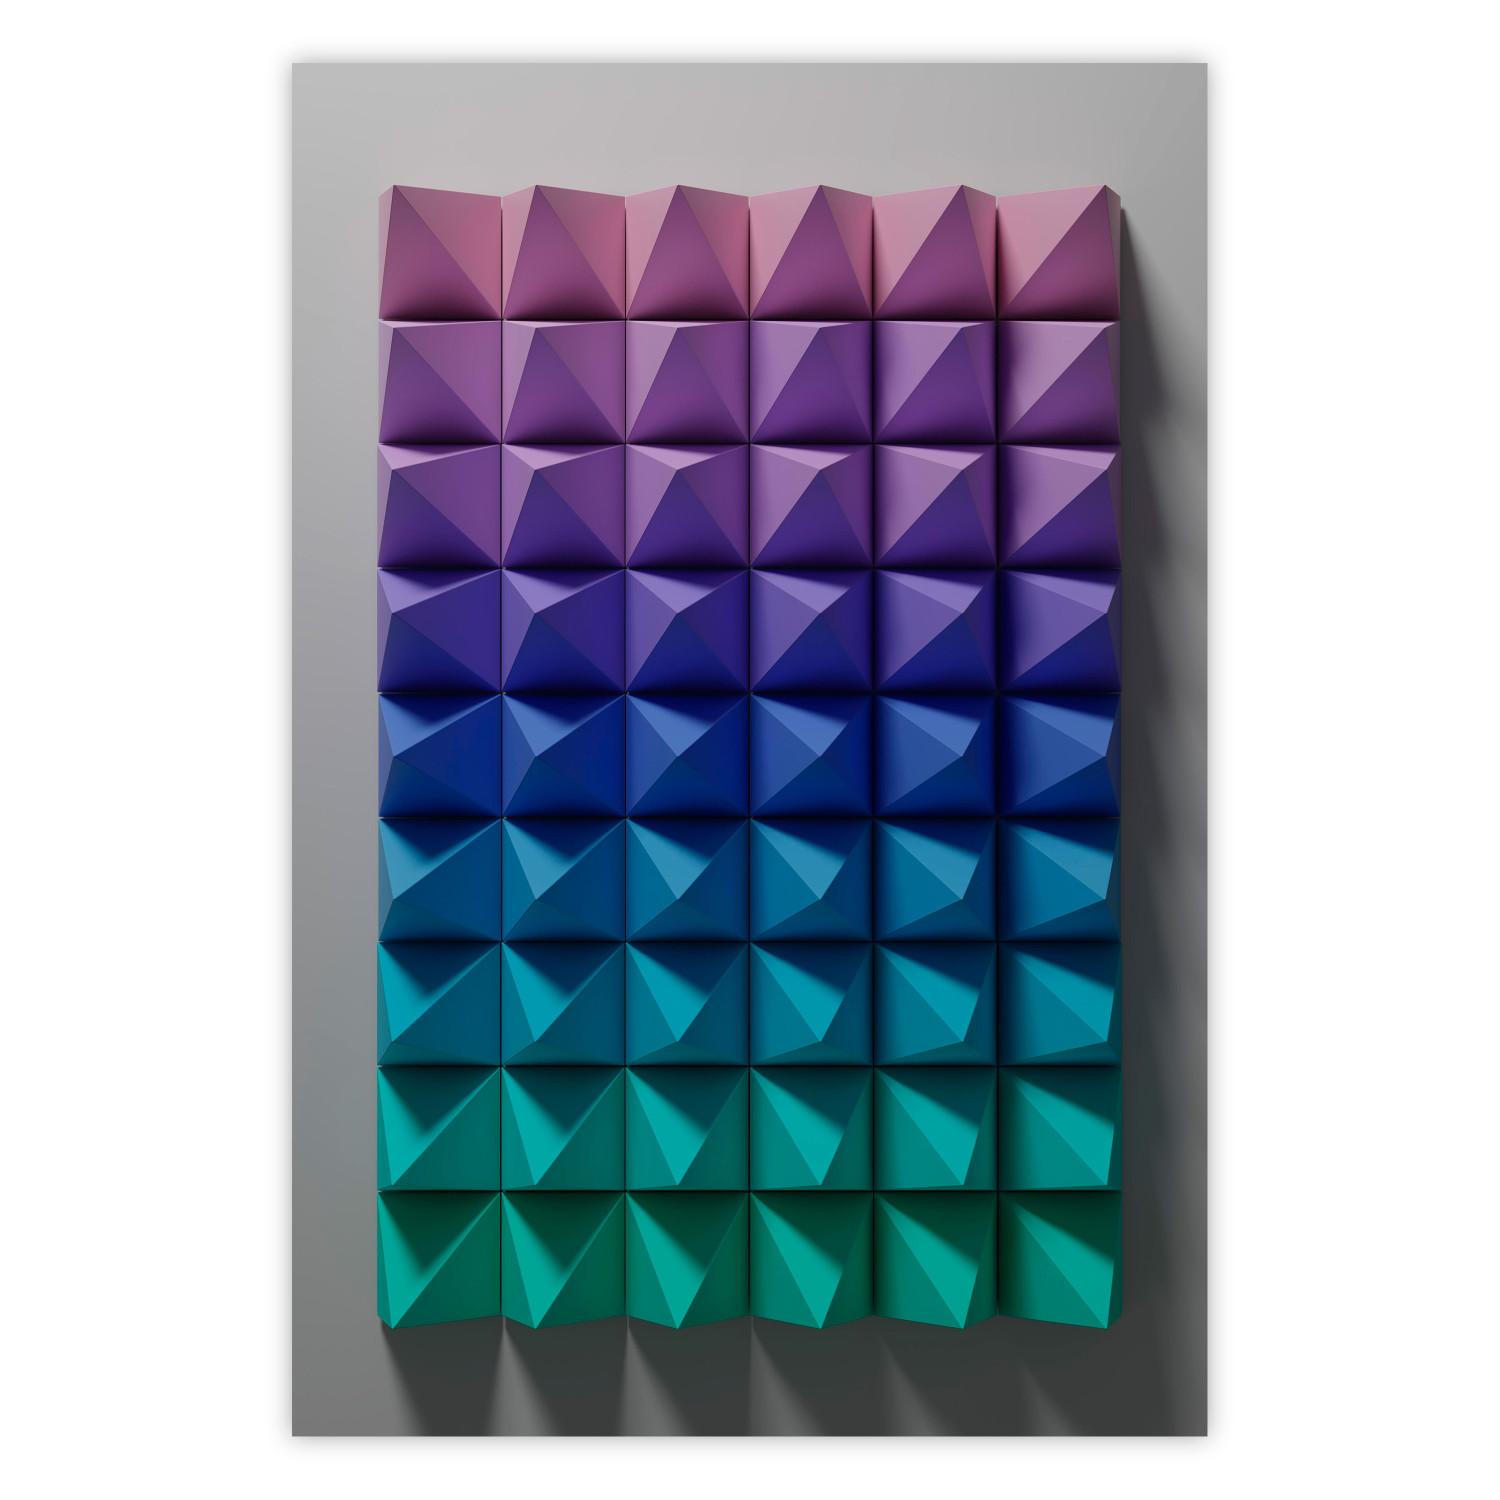 Poster Stillness - multicolored composition of a 3D-like geometric figure